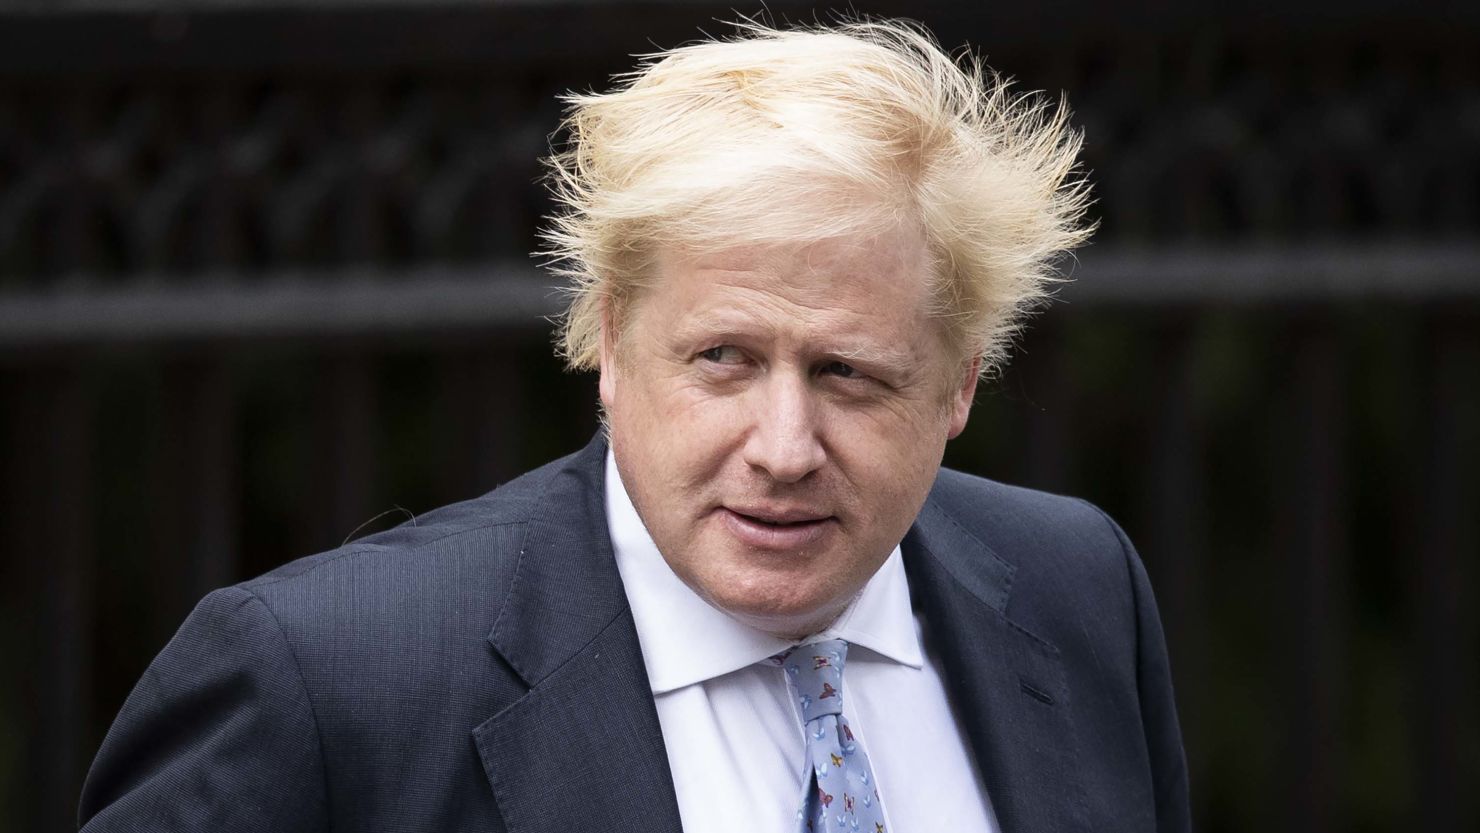 Boris Johnson resigned as Britain's foreign secretary in July.